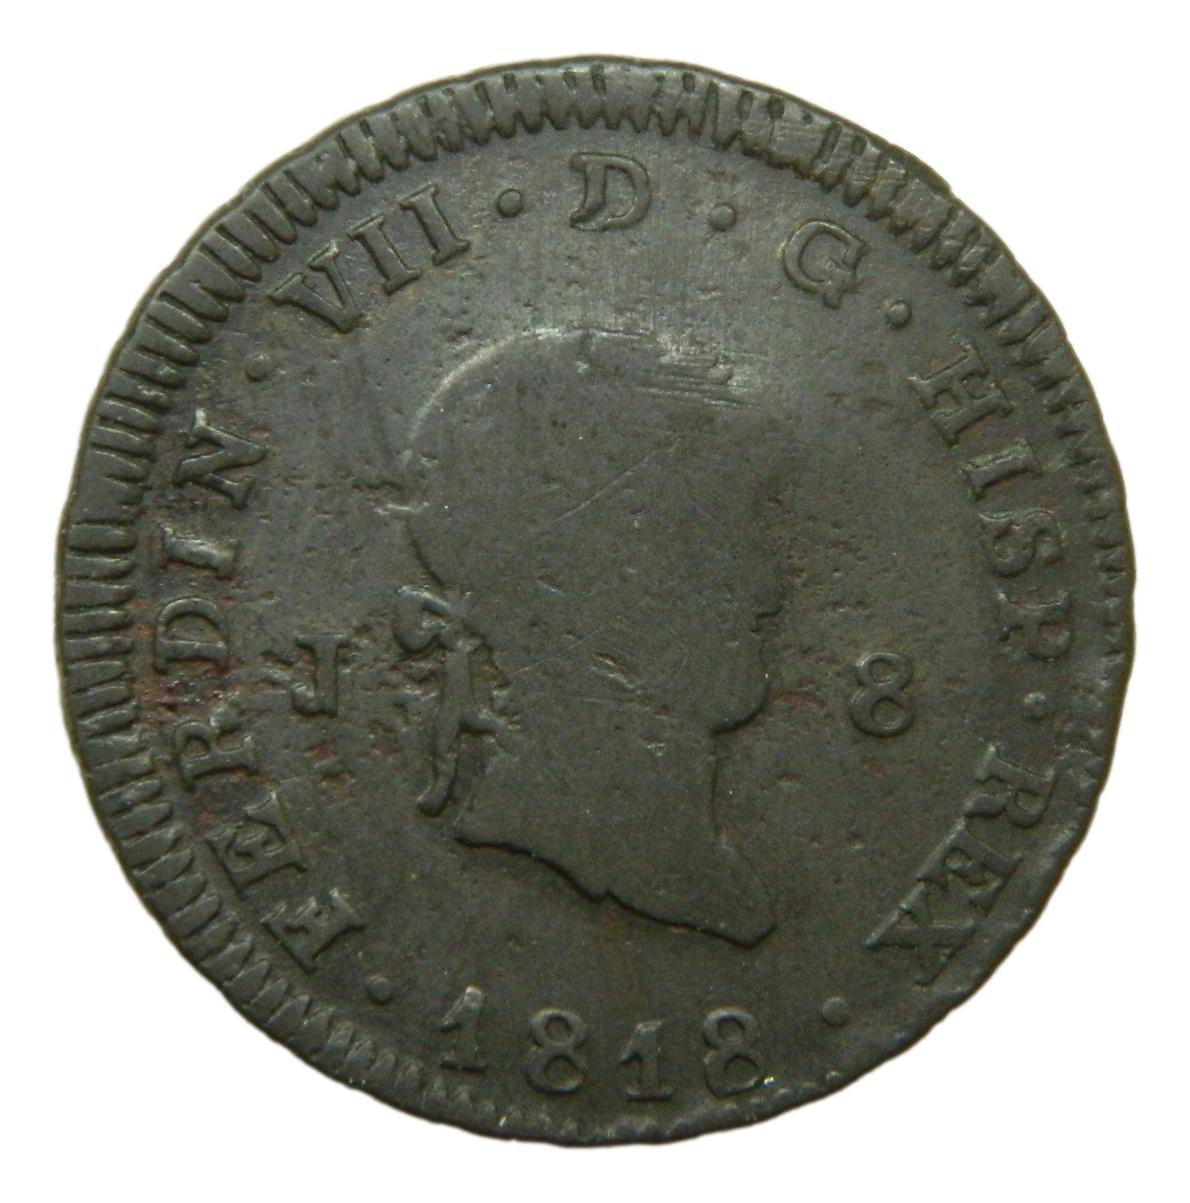 1818 - FERNANDO VII - 8 MARAVEDIS - JUBIA